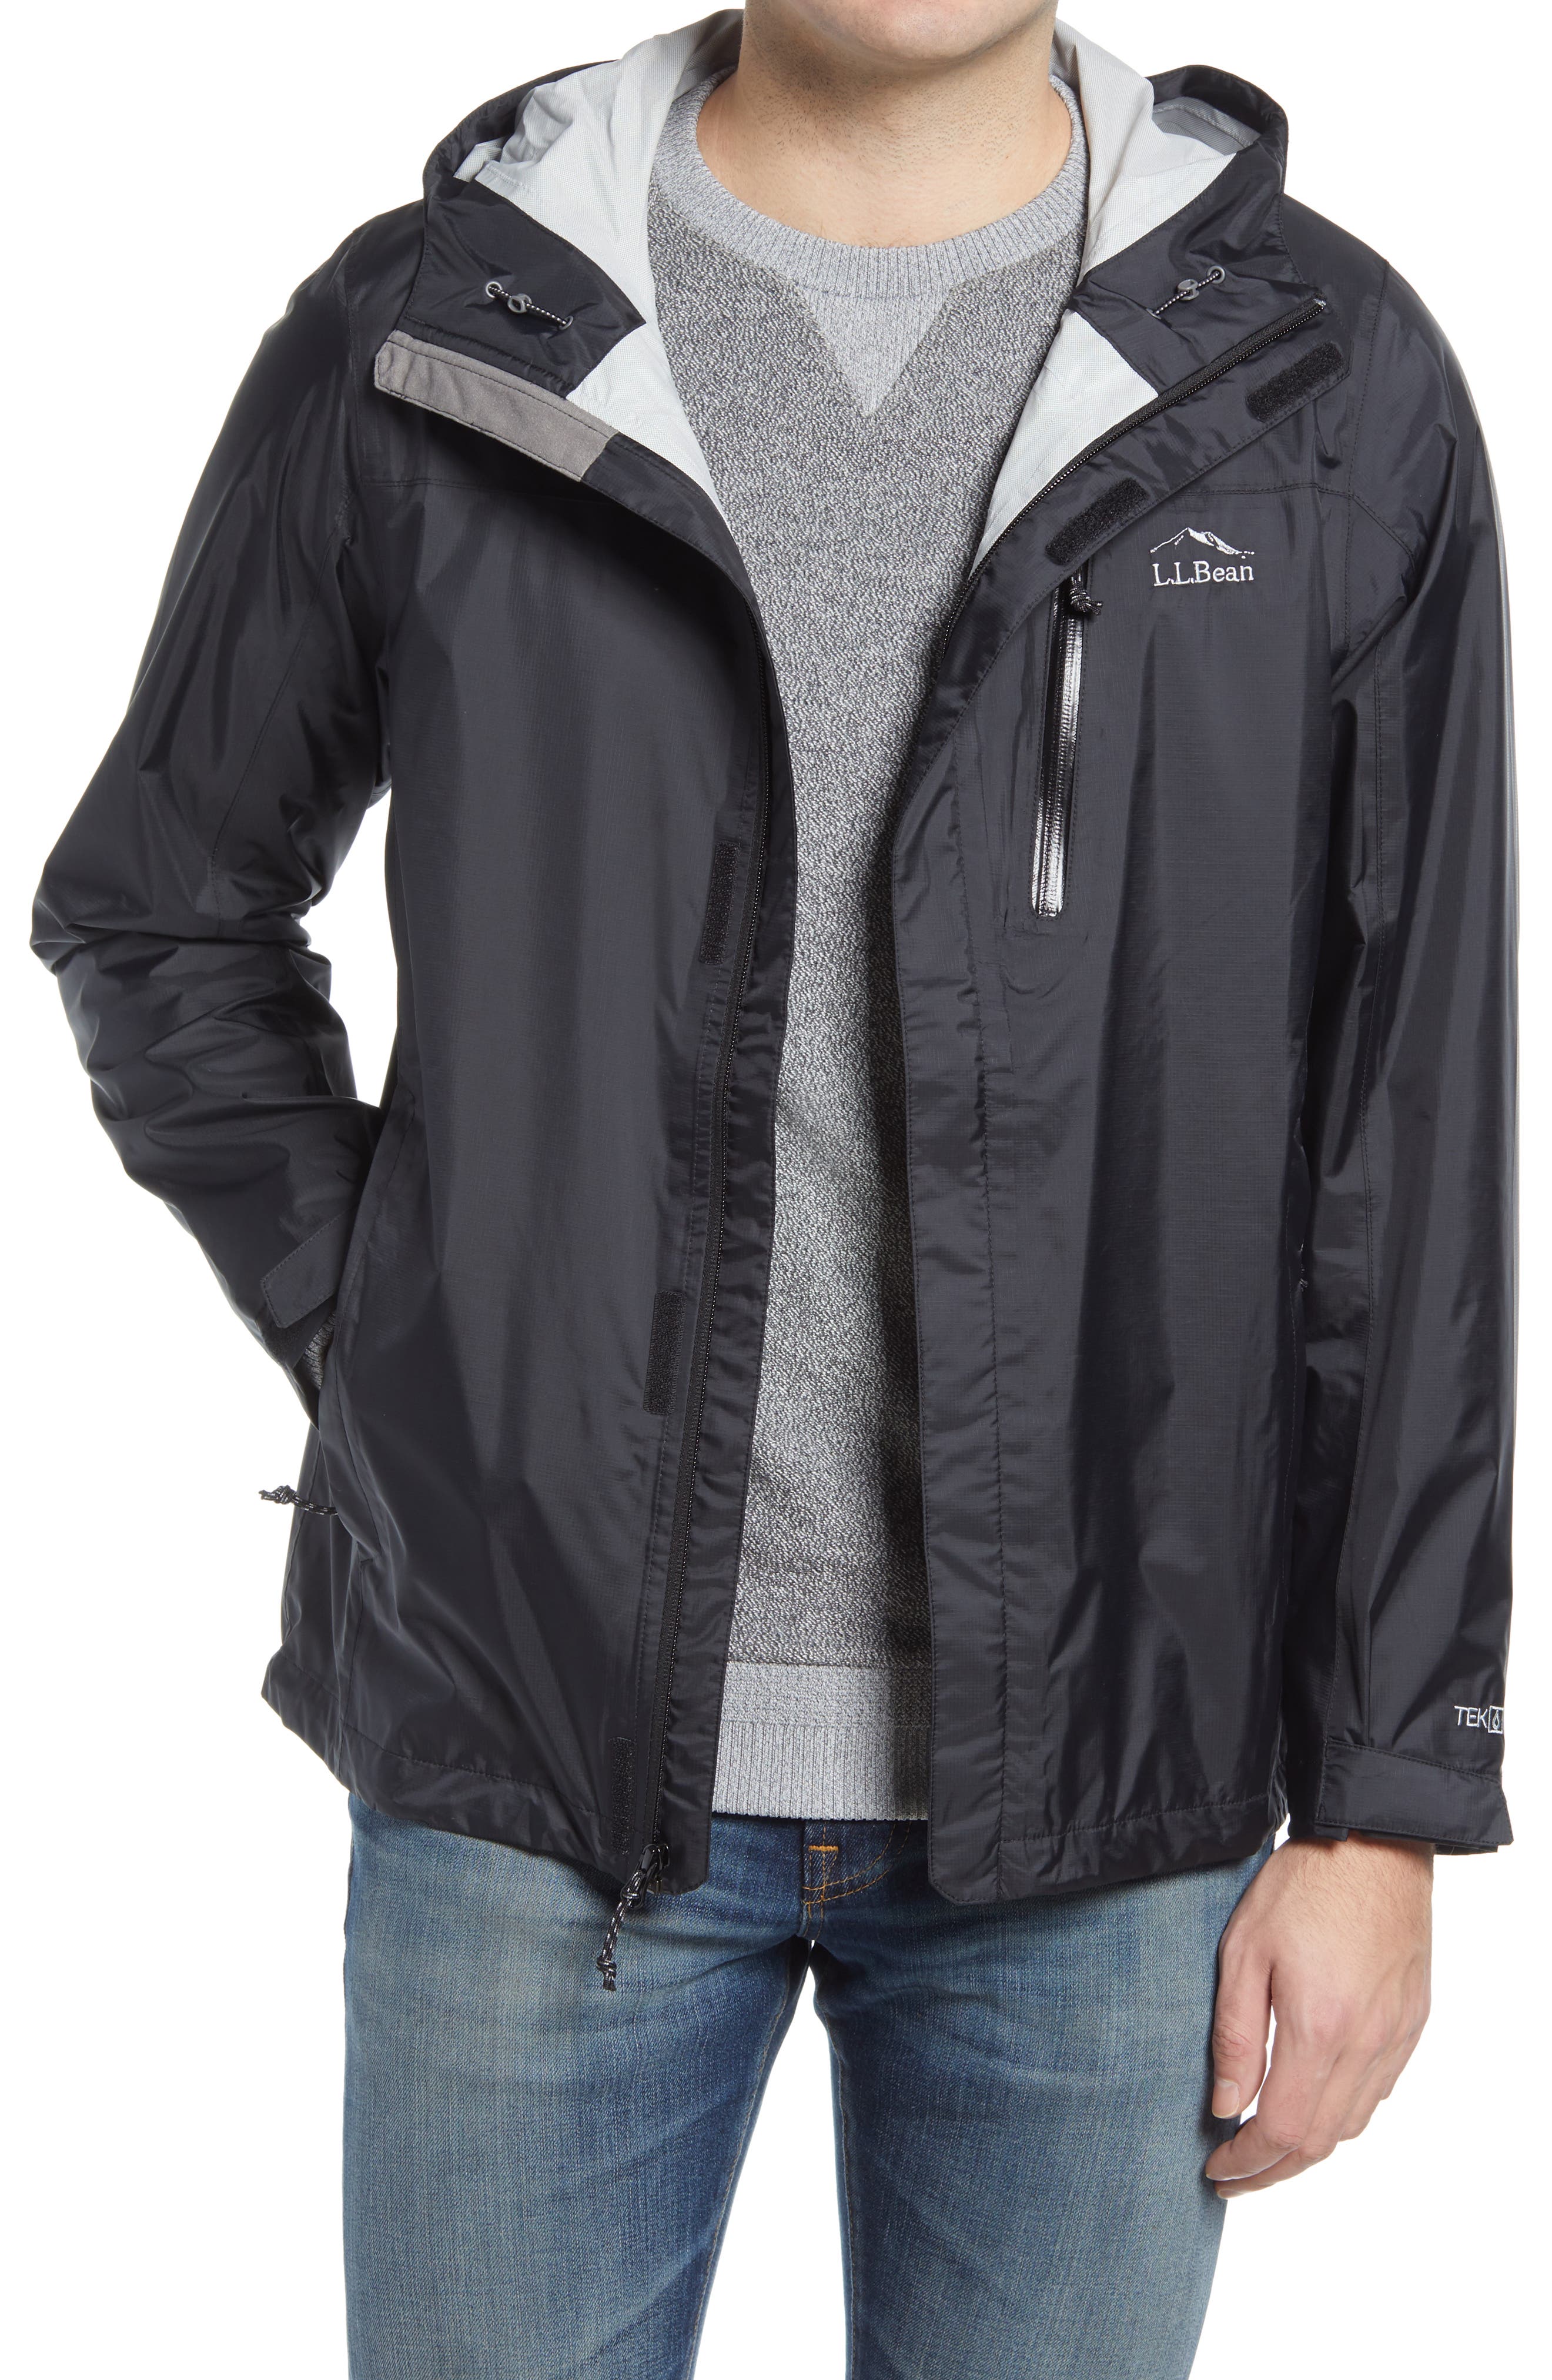 Mens Rain Jacket Coats with Hood Lightweight Waterproof Windbreaker